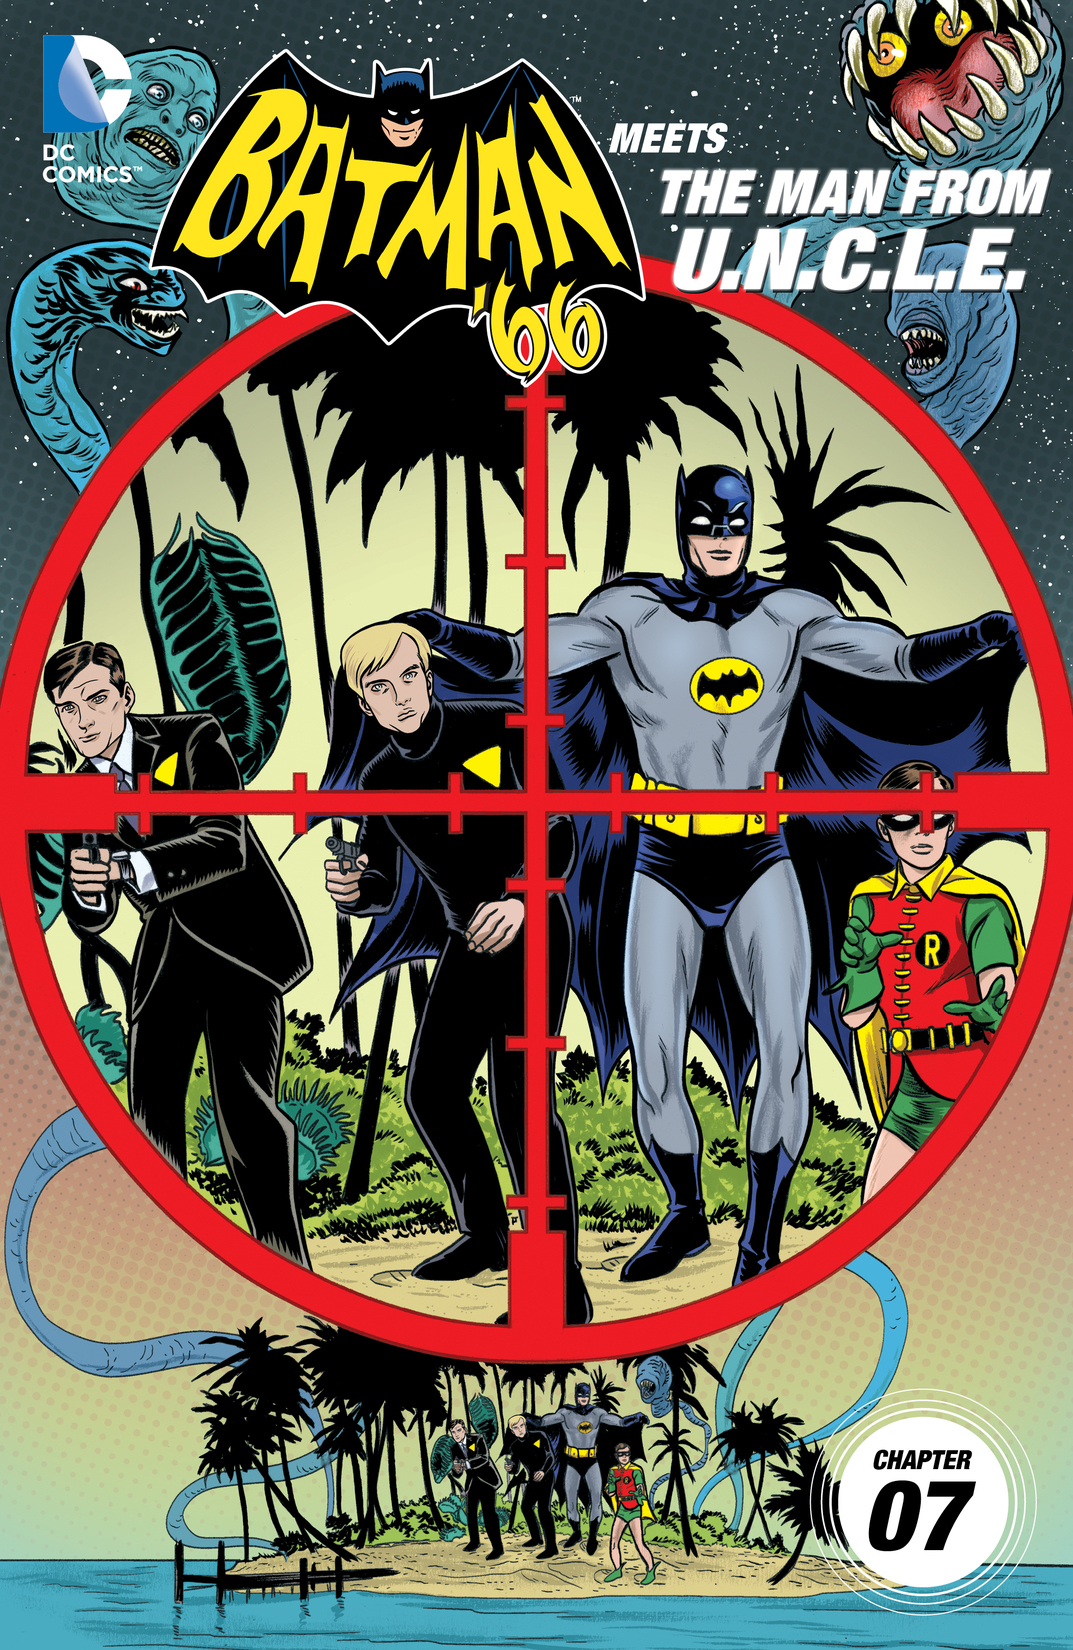 Batman '66 Meets The Man From U.N.C.L.E. #7 preview images